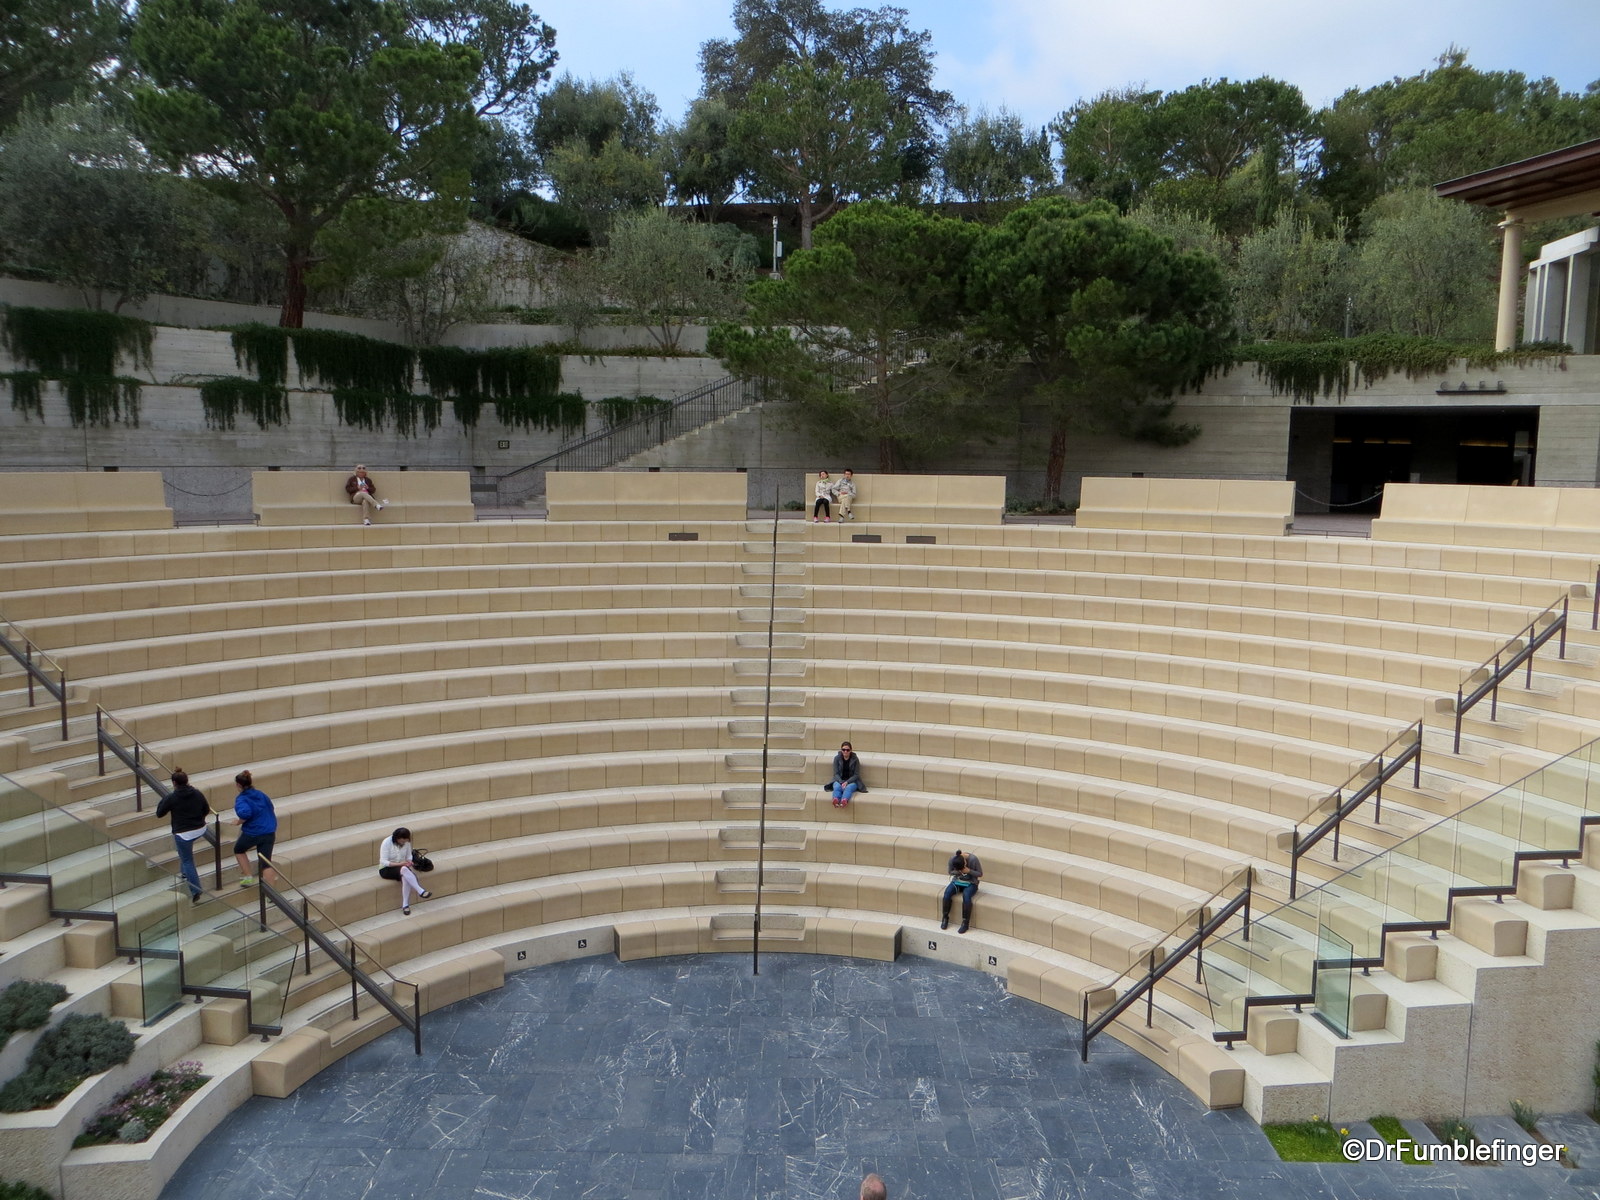 Barbara and Lawrence Fleischman Theater, Getty Villa. A Roman era style amphitheater